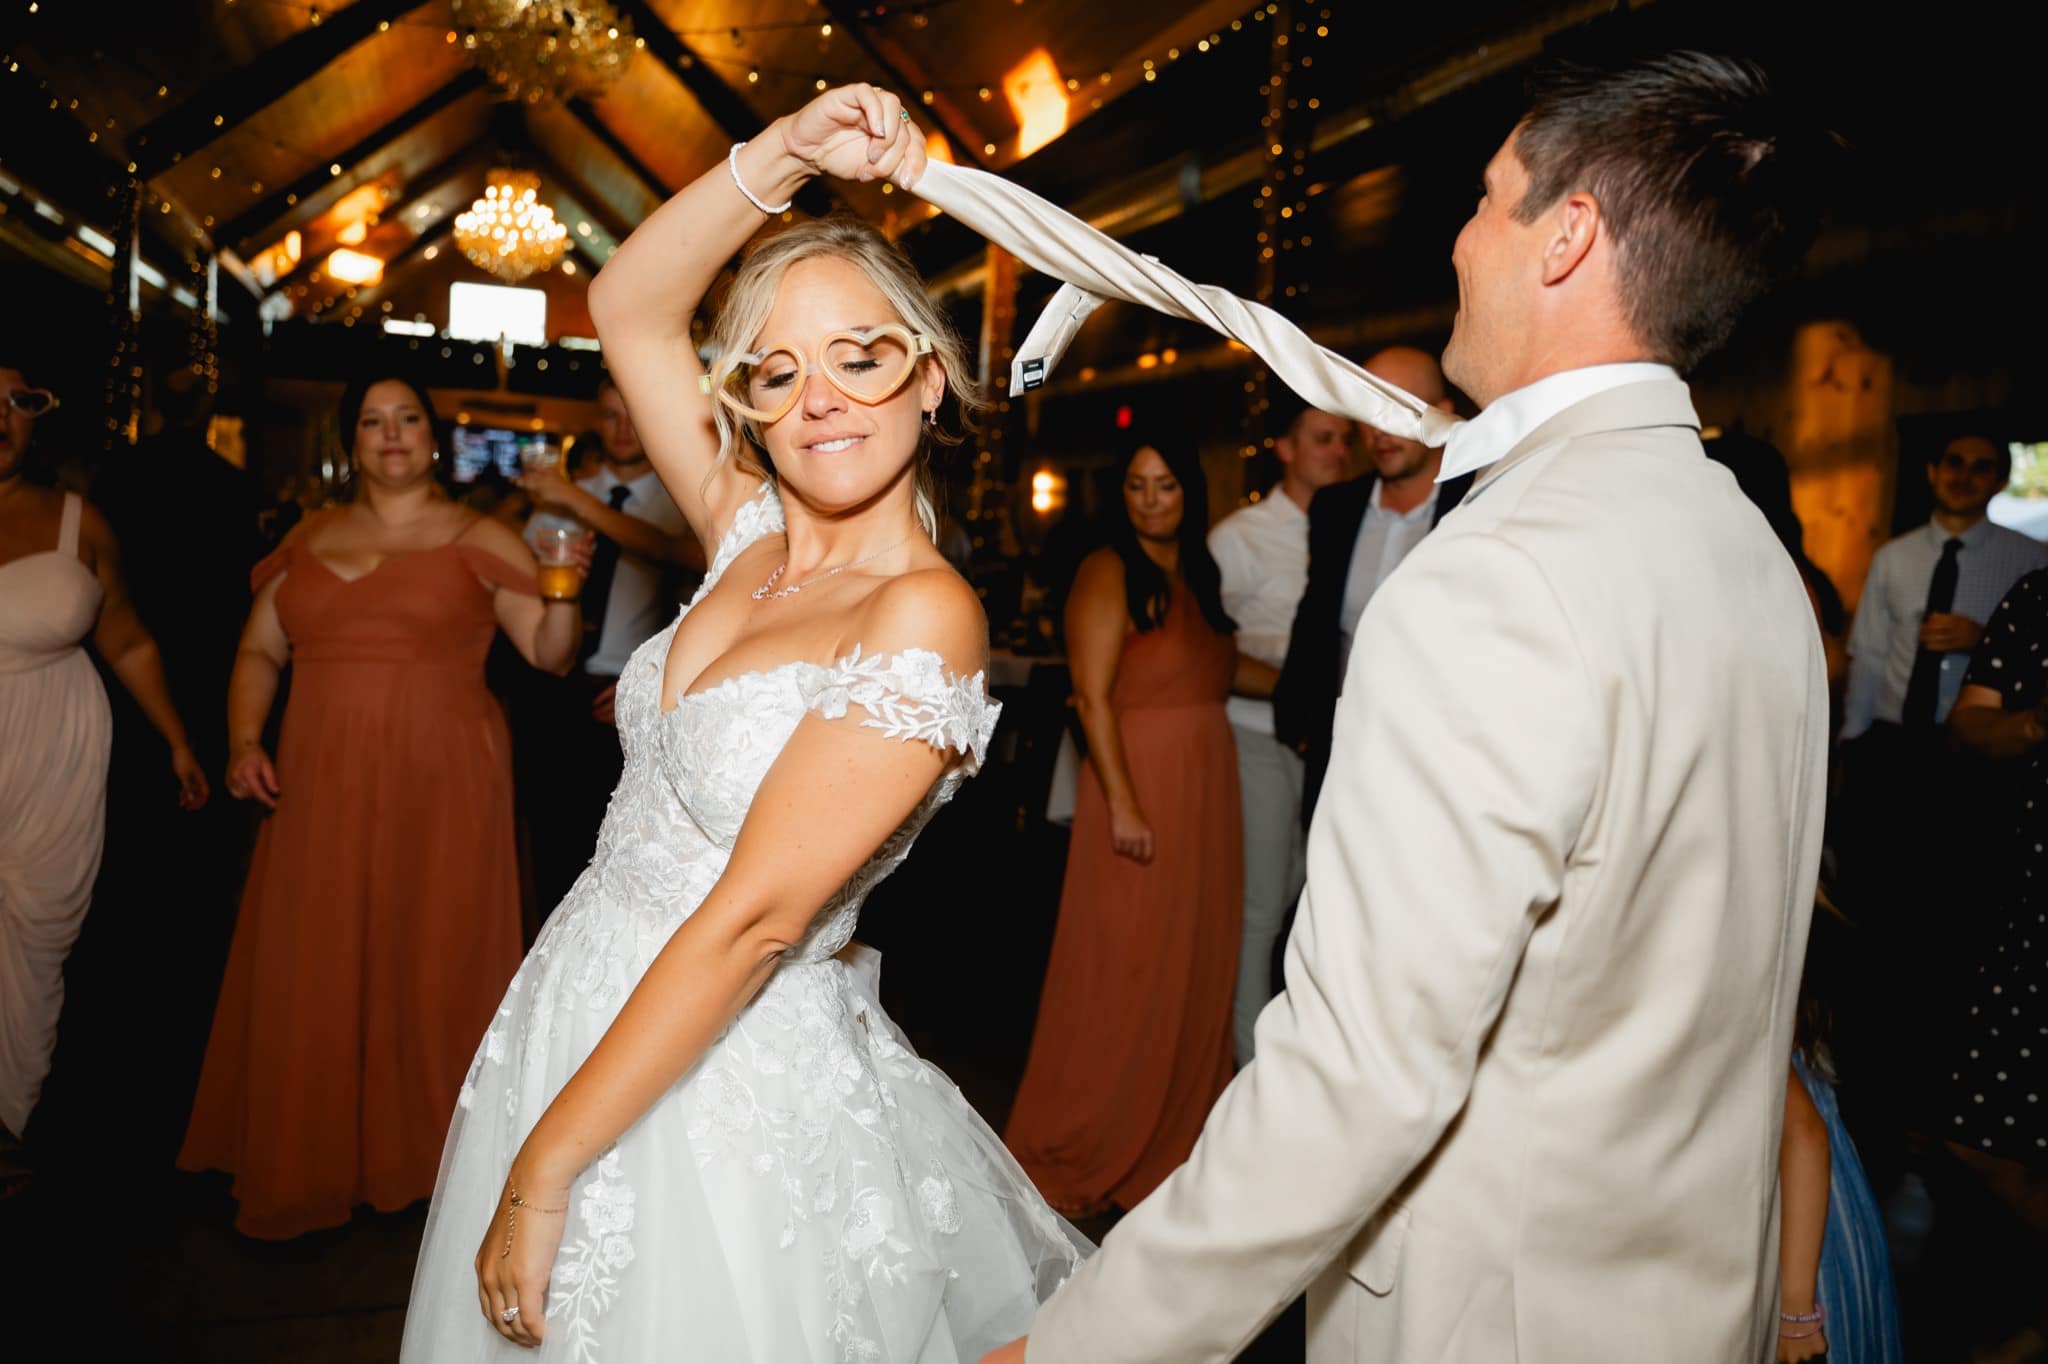 fun bride and groom dancing photos